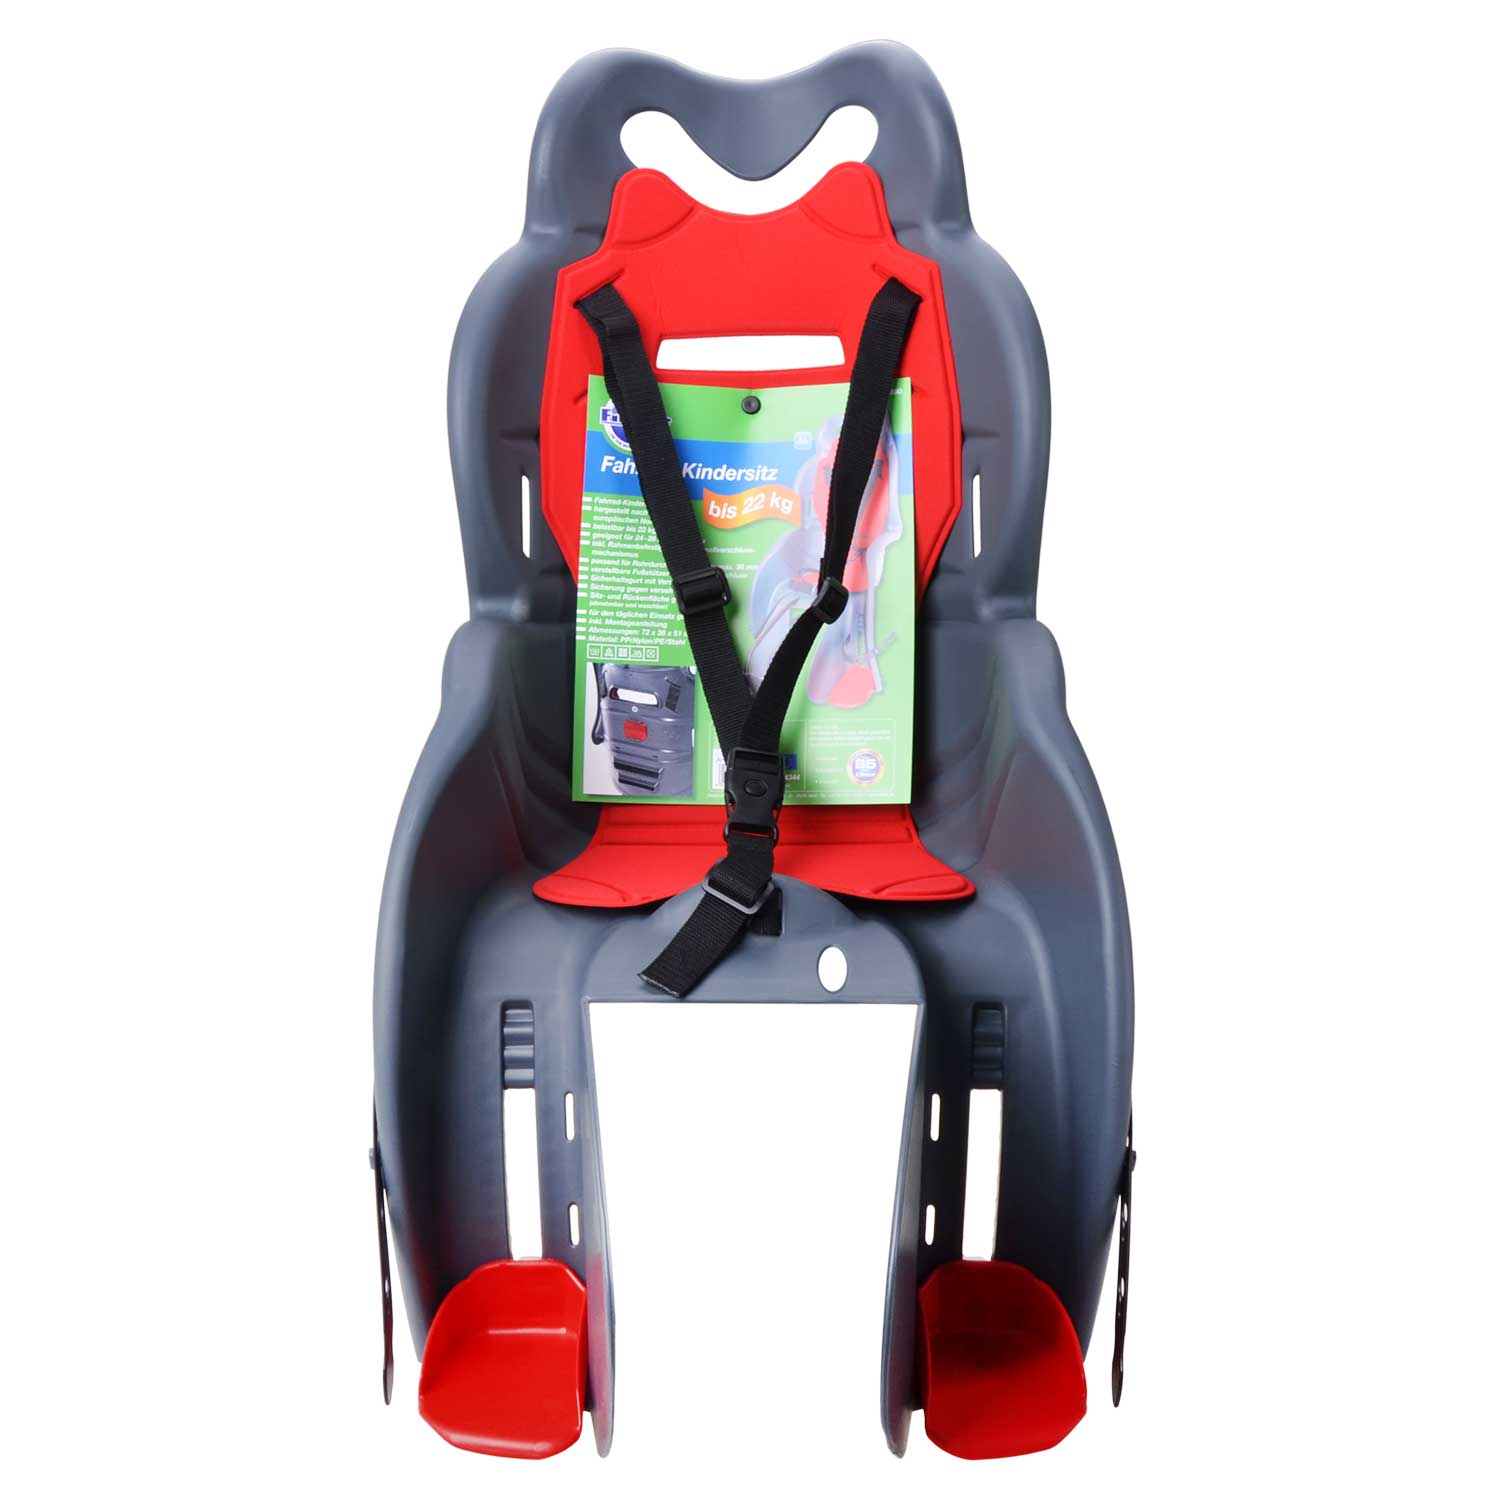 Fahrrad-Kindersitz Calippo dunkelgrau/rot